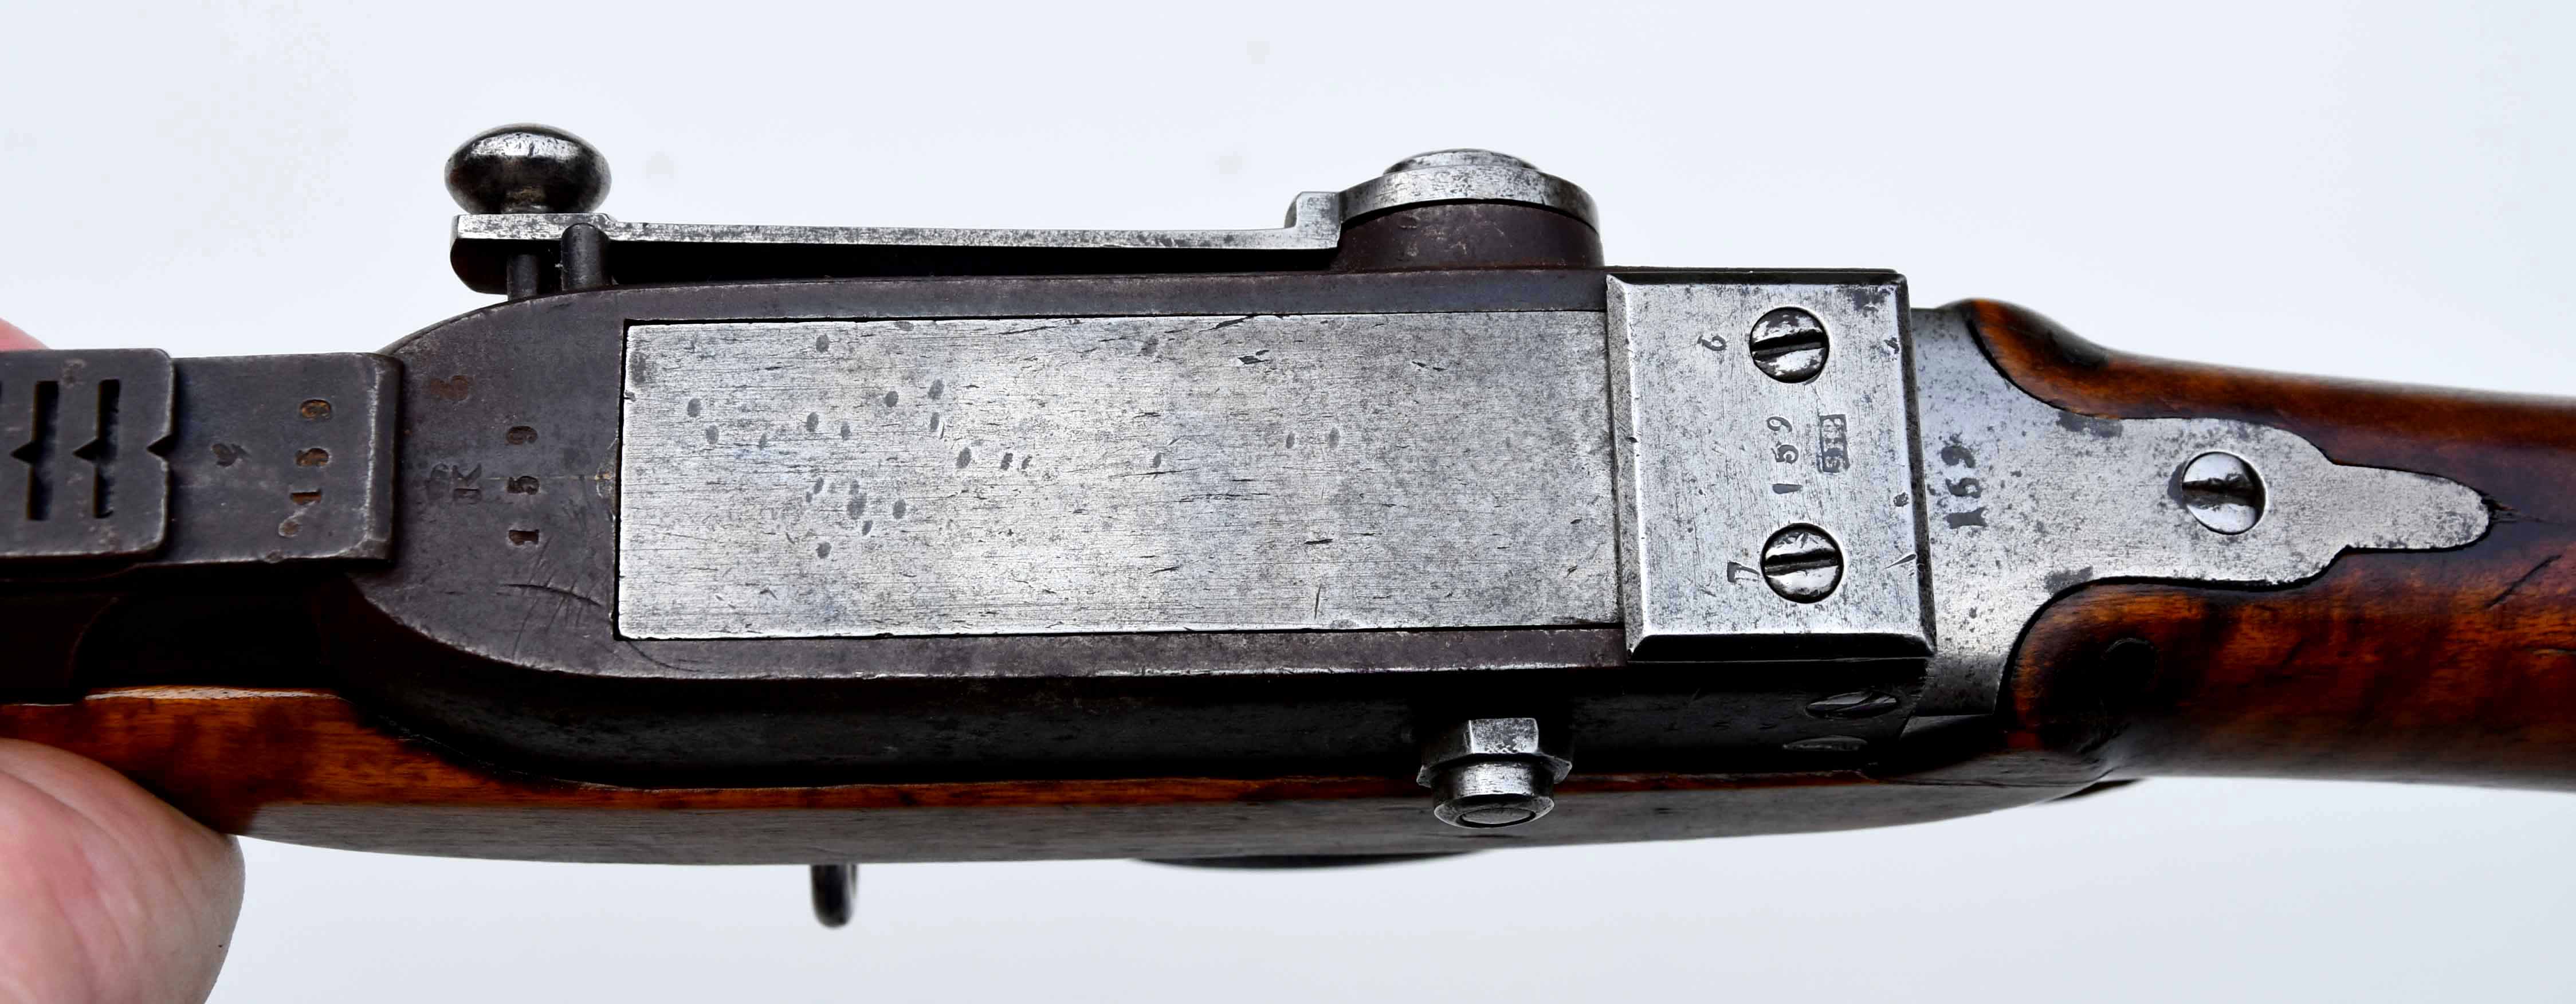 ./guns/rifle/bilder/Rifle-Kongsberg-Kammerlader-M1842-55-59-159-5.jpg